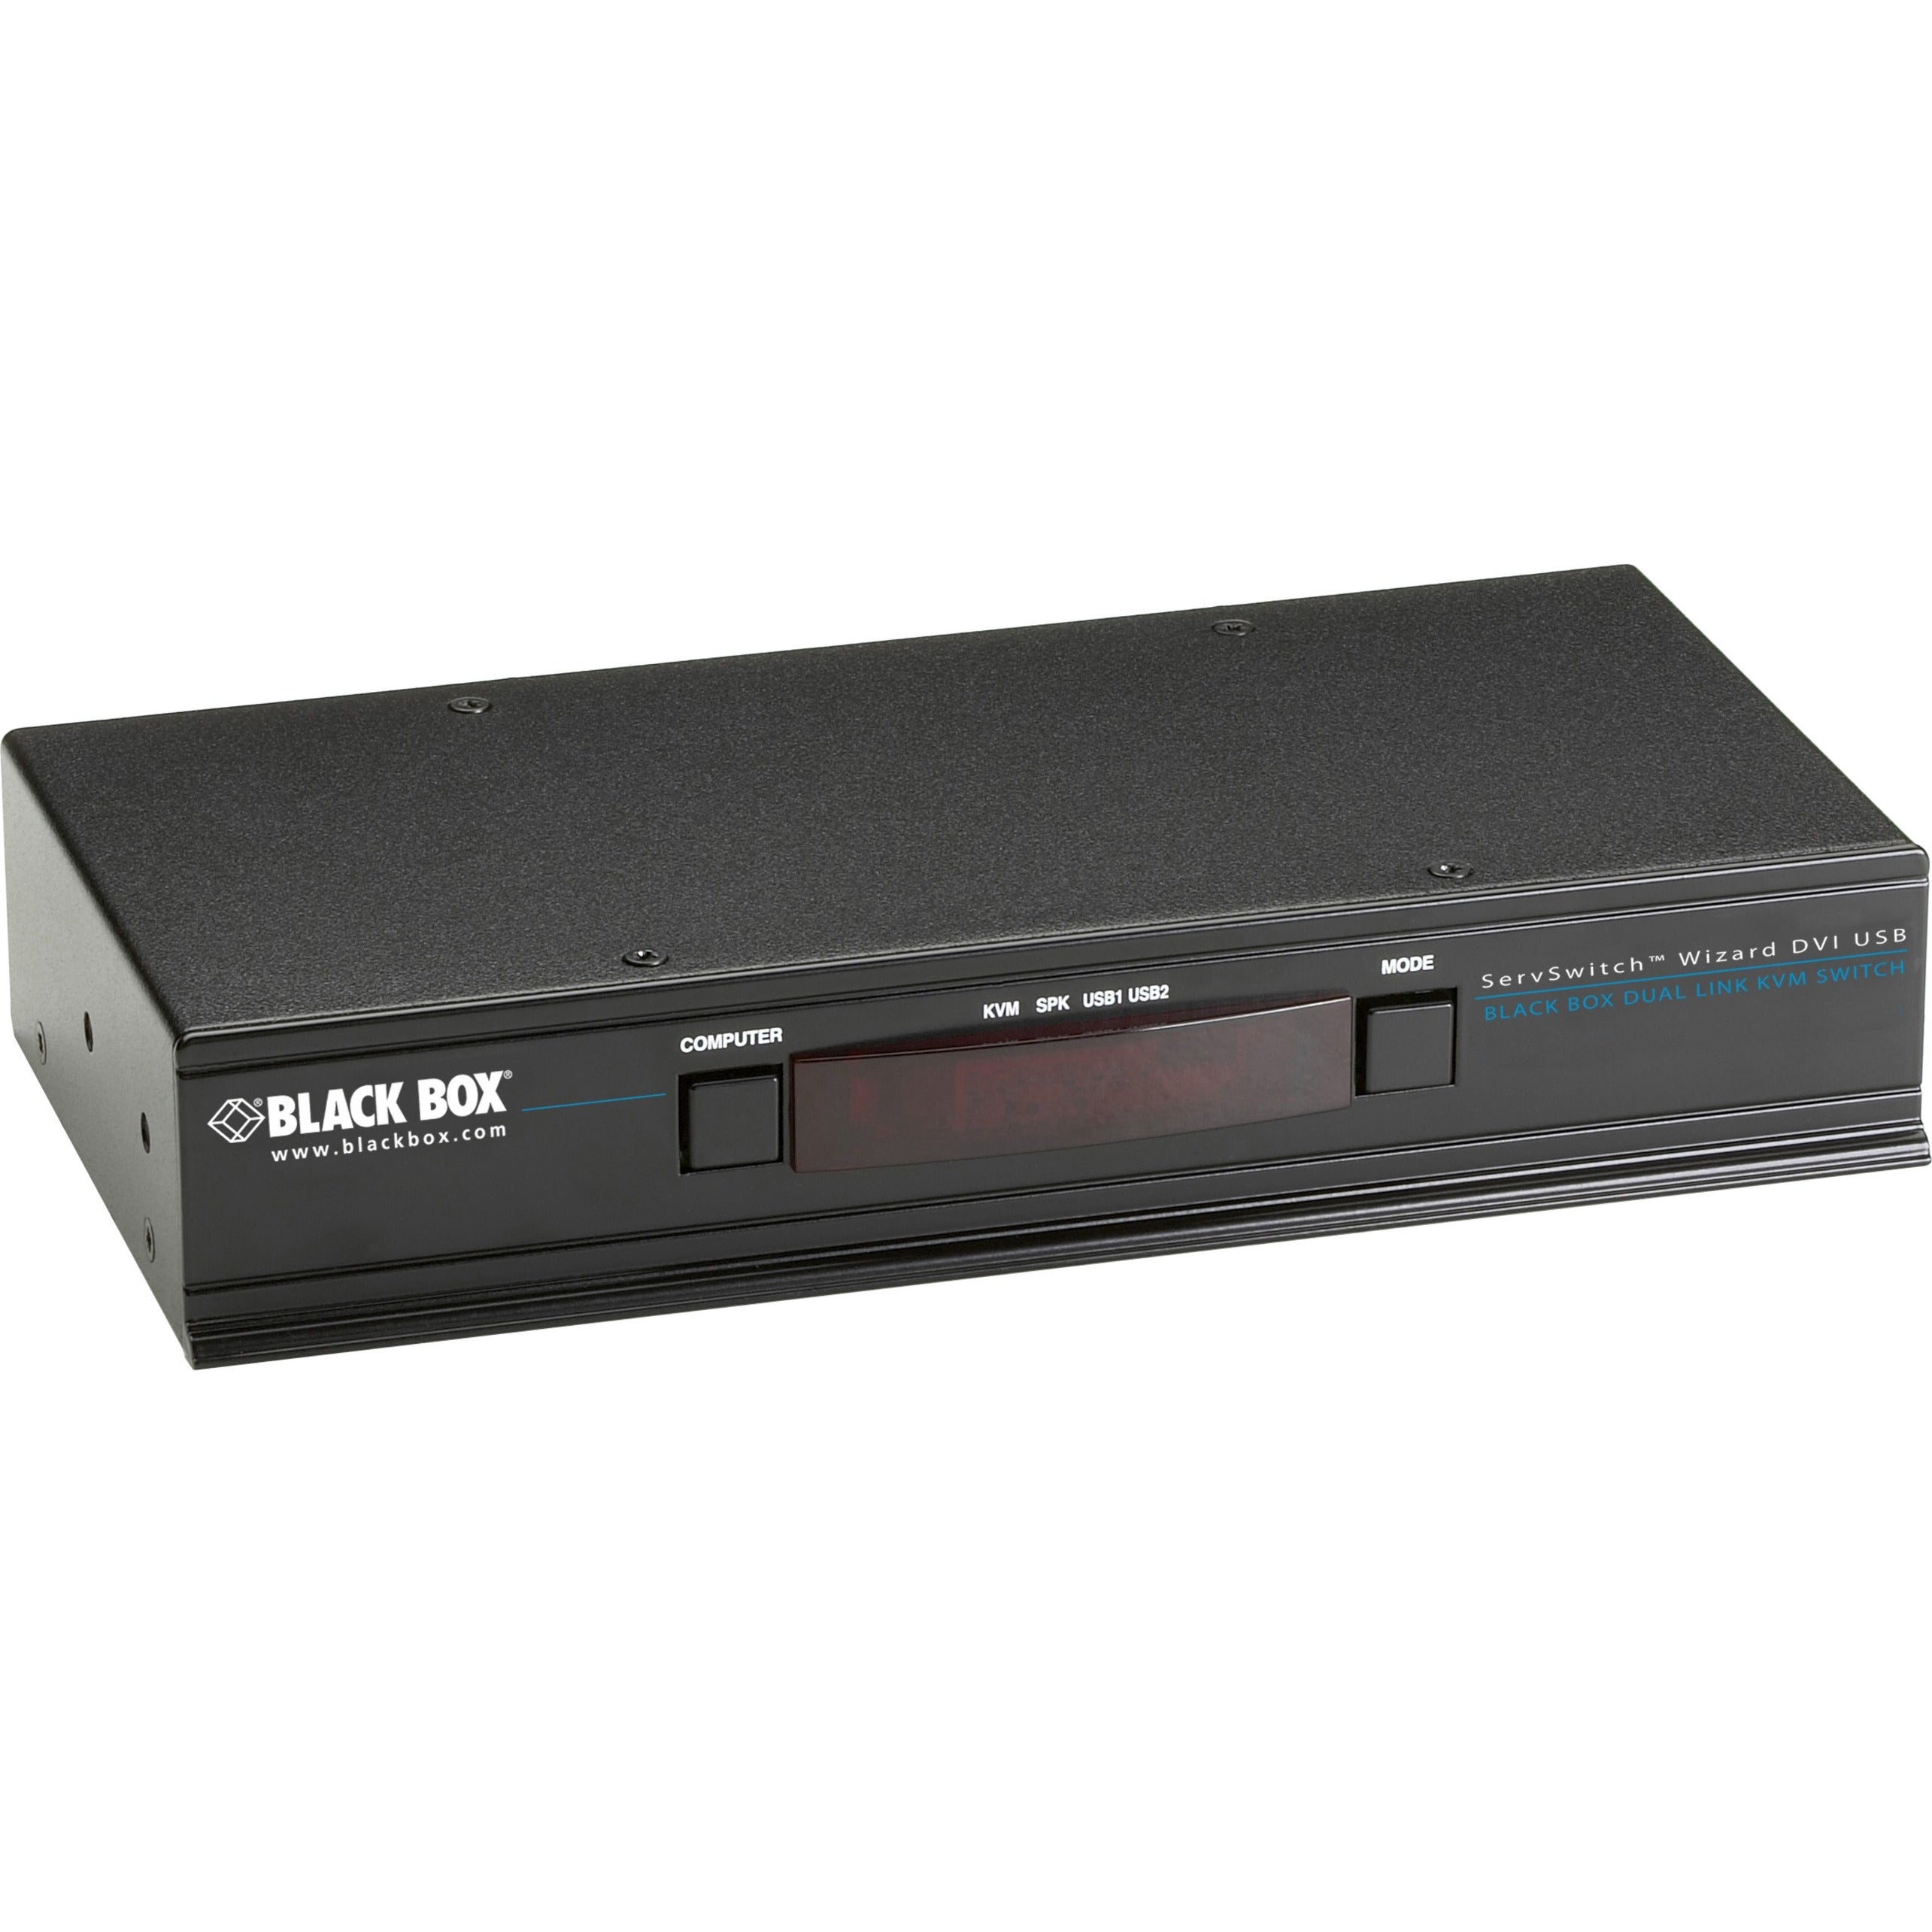 Black Box KV2004A ServSwitch Wizard DVI Dual-Link (USB), 4-Port KVM Switchbox